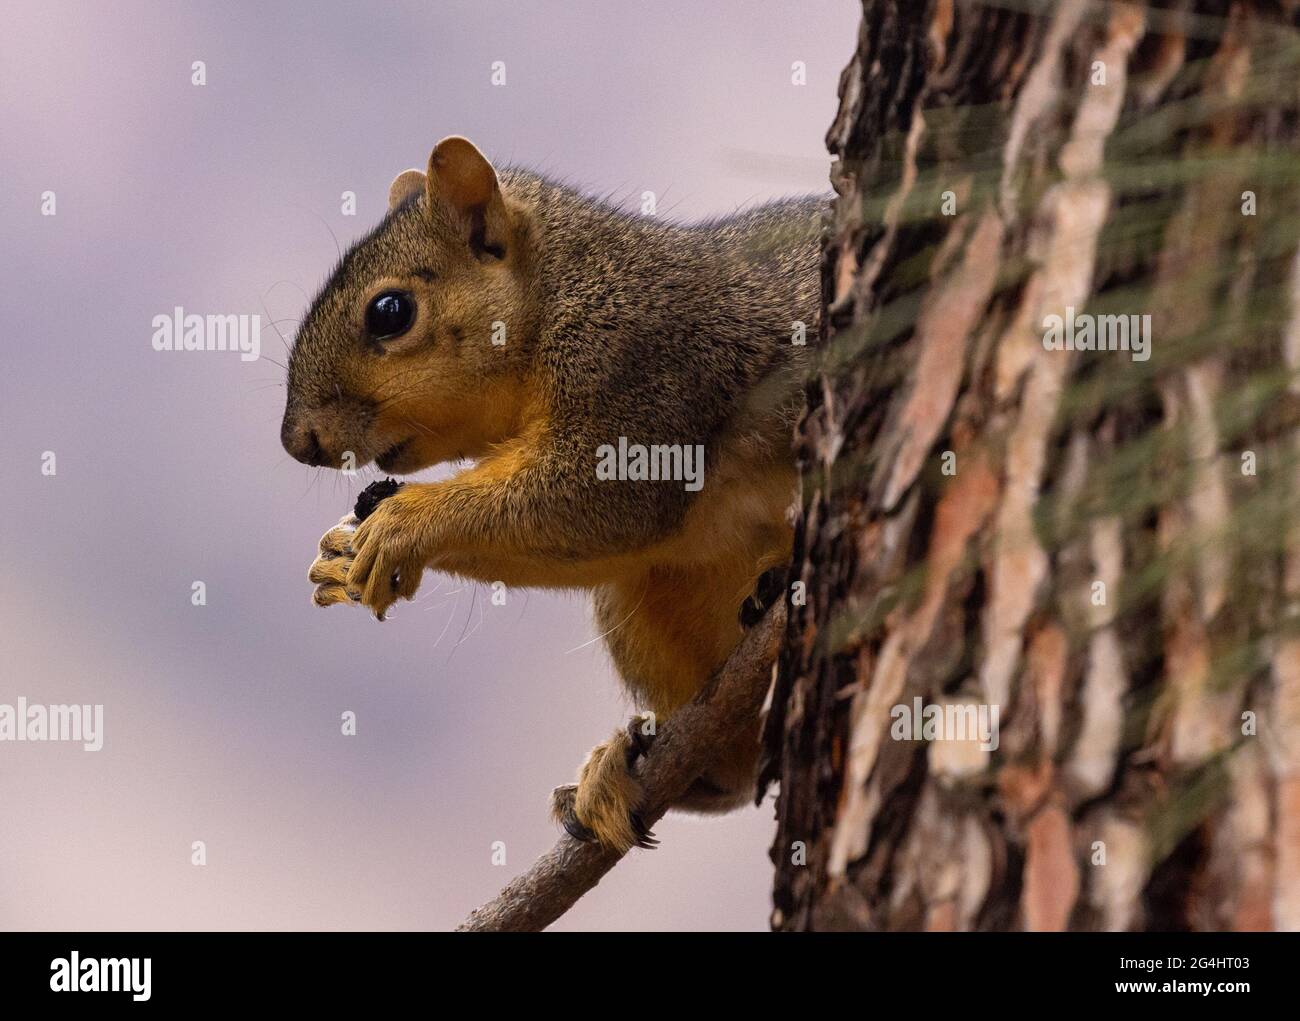 Squirrel close up Banque D'Images